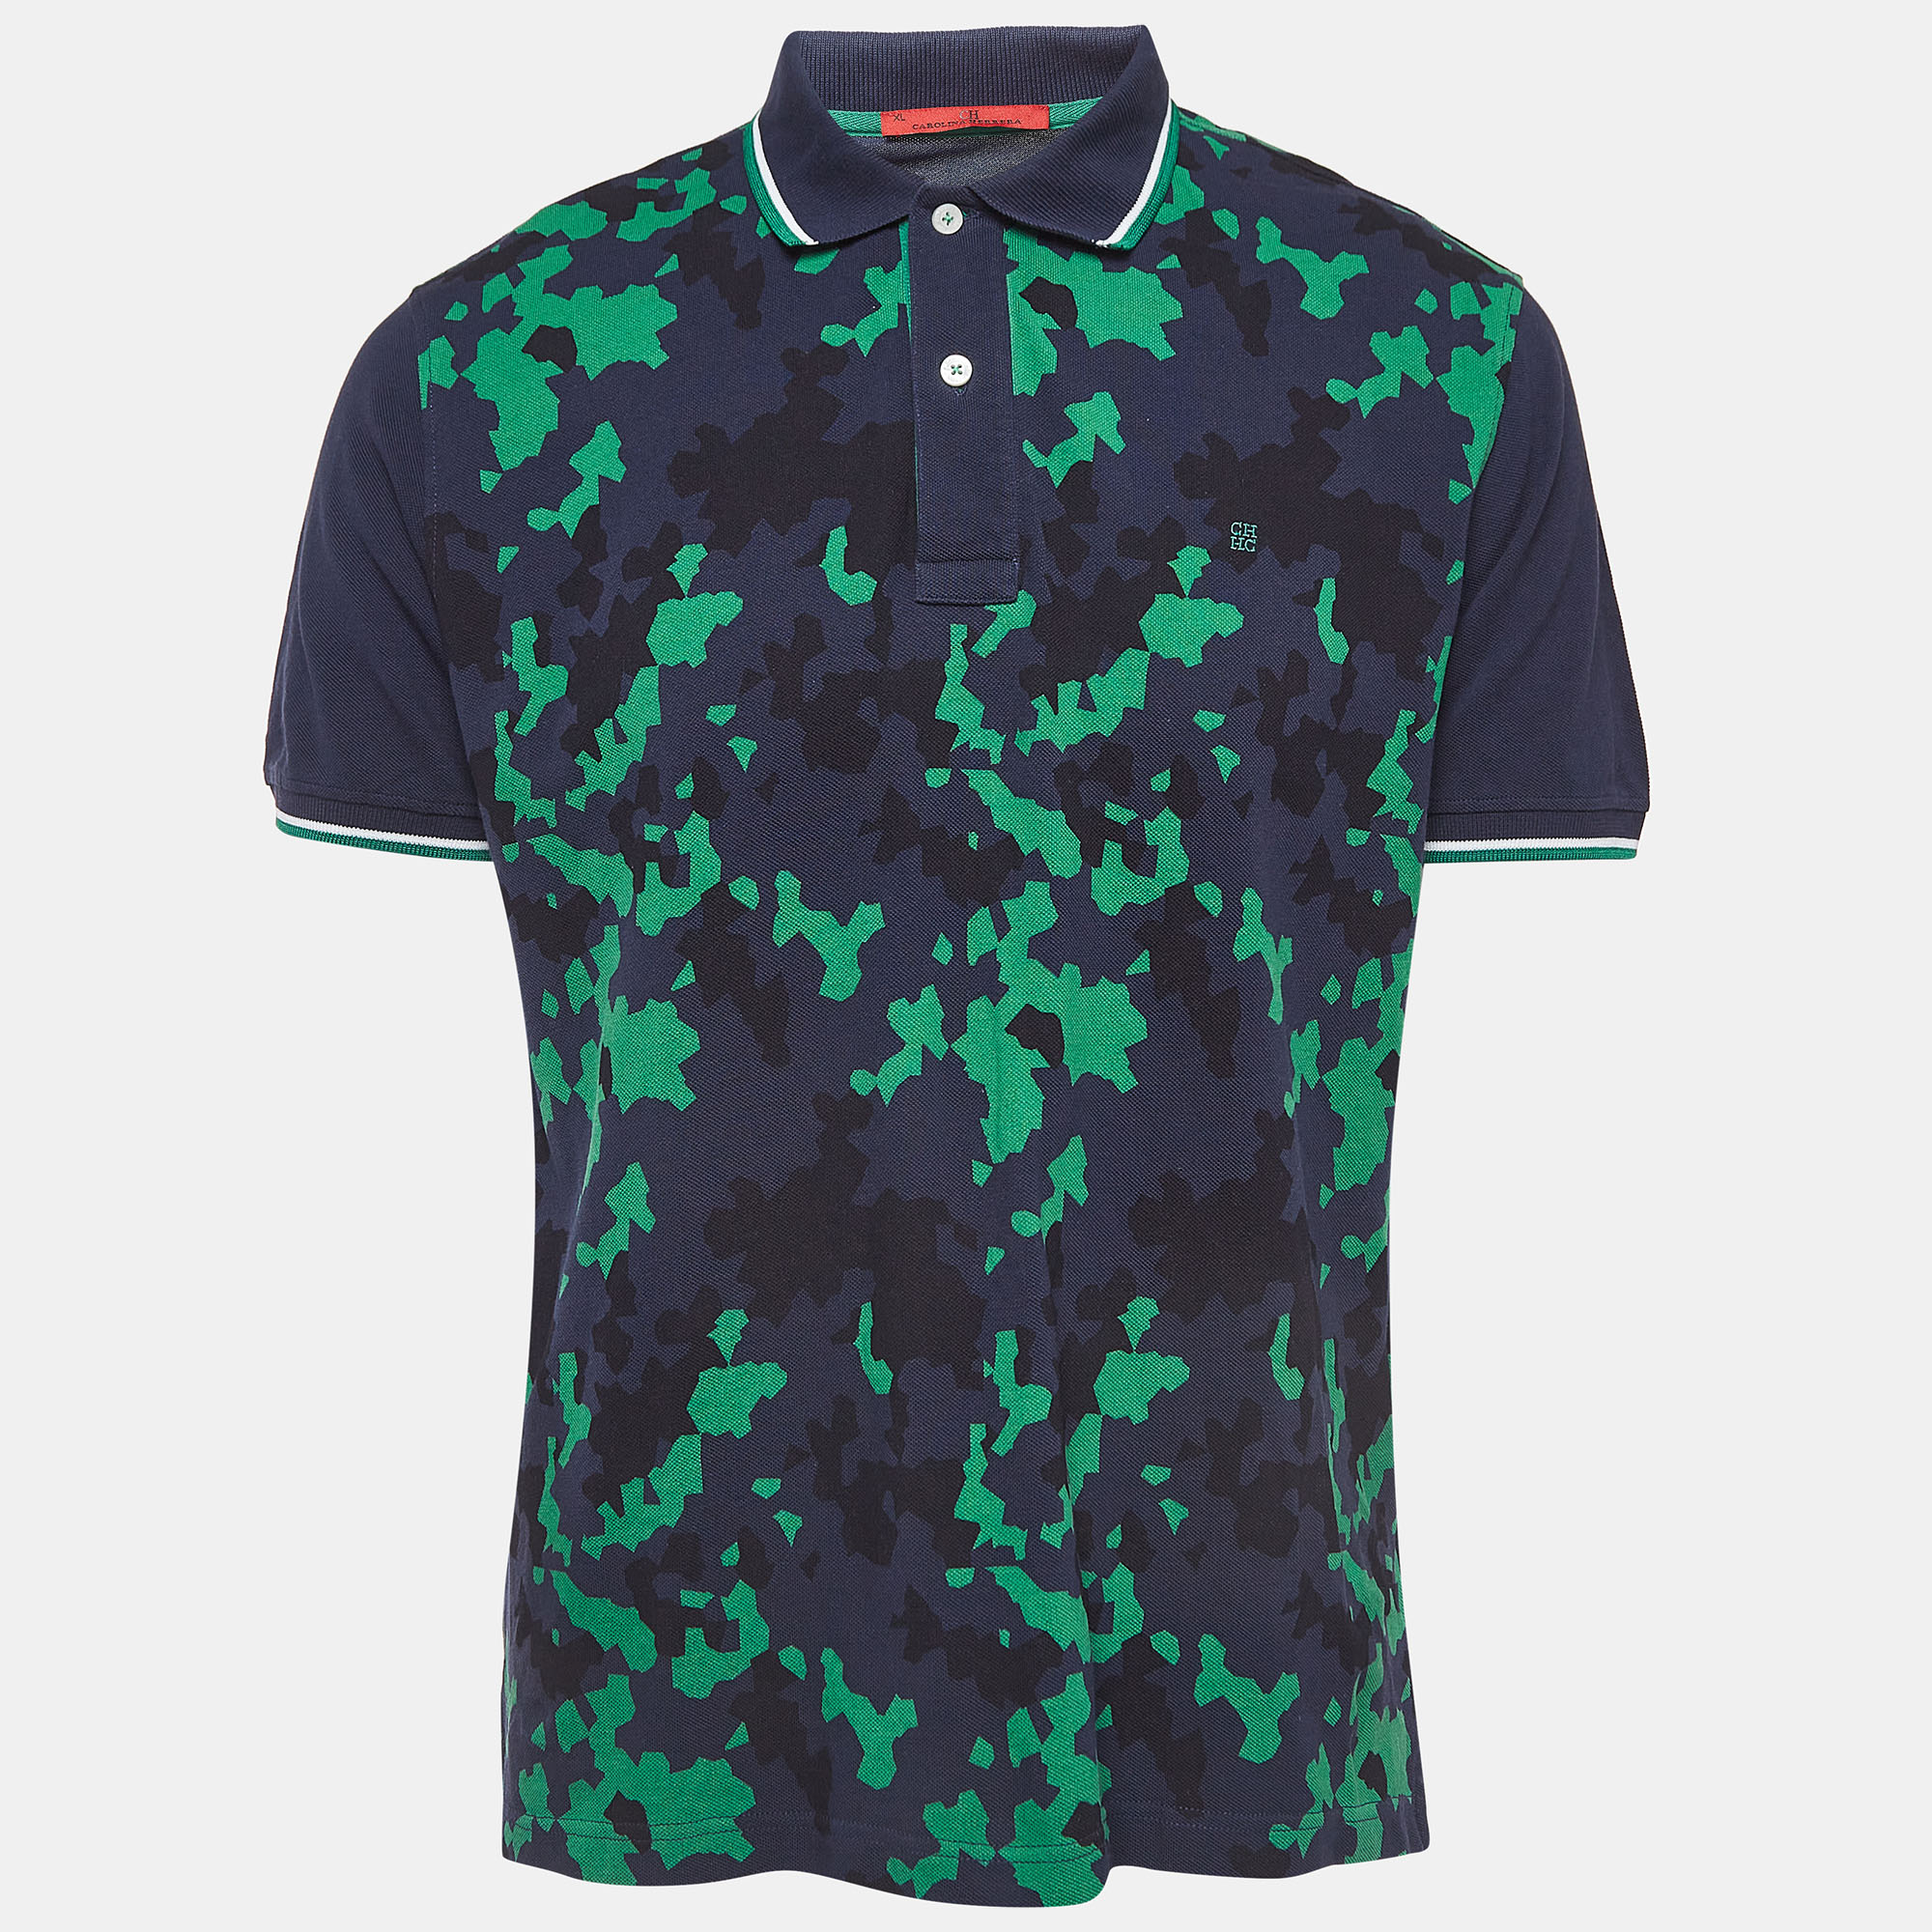 Ch carolina herrera navy blue camouflage print cotton pique polo t-shirt xl